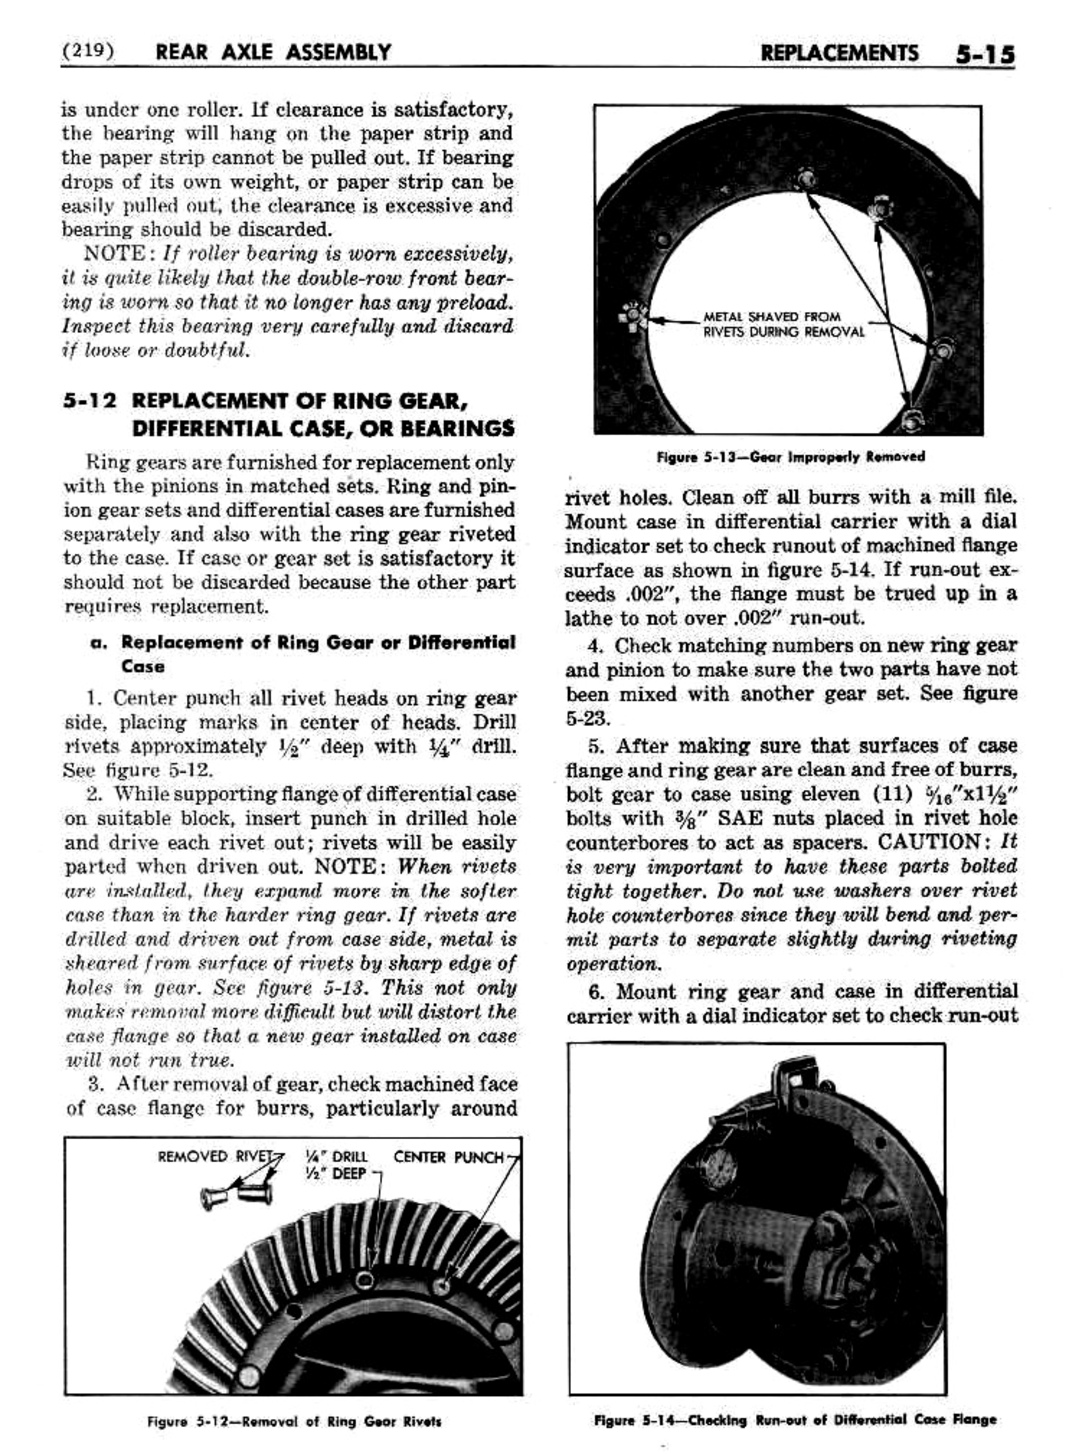 n_06 1951 Buick Shop Manual - Rear Axle-015-015.jpg